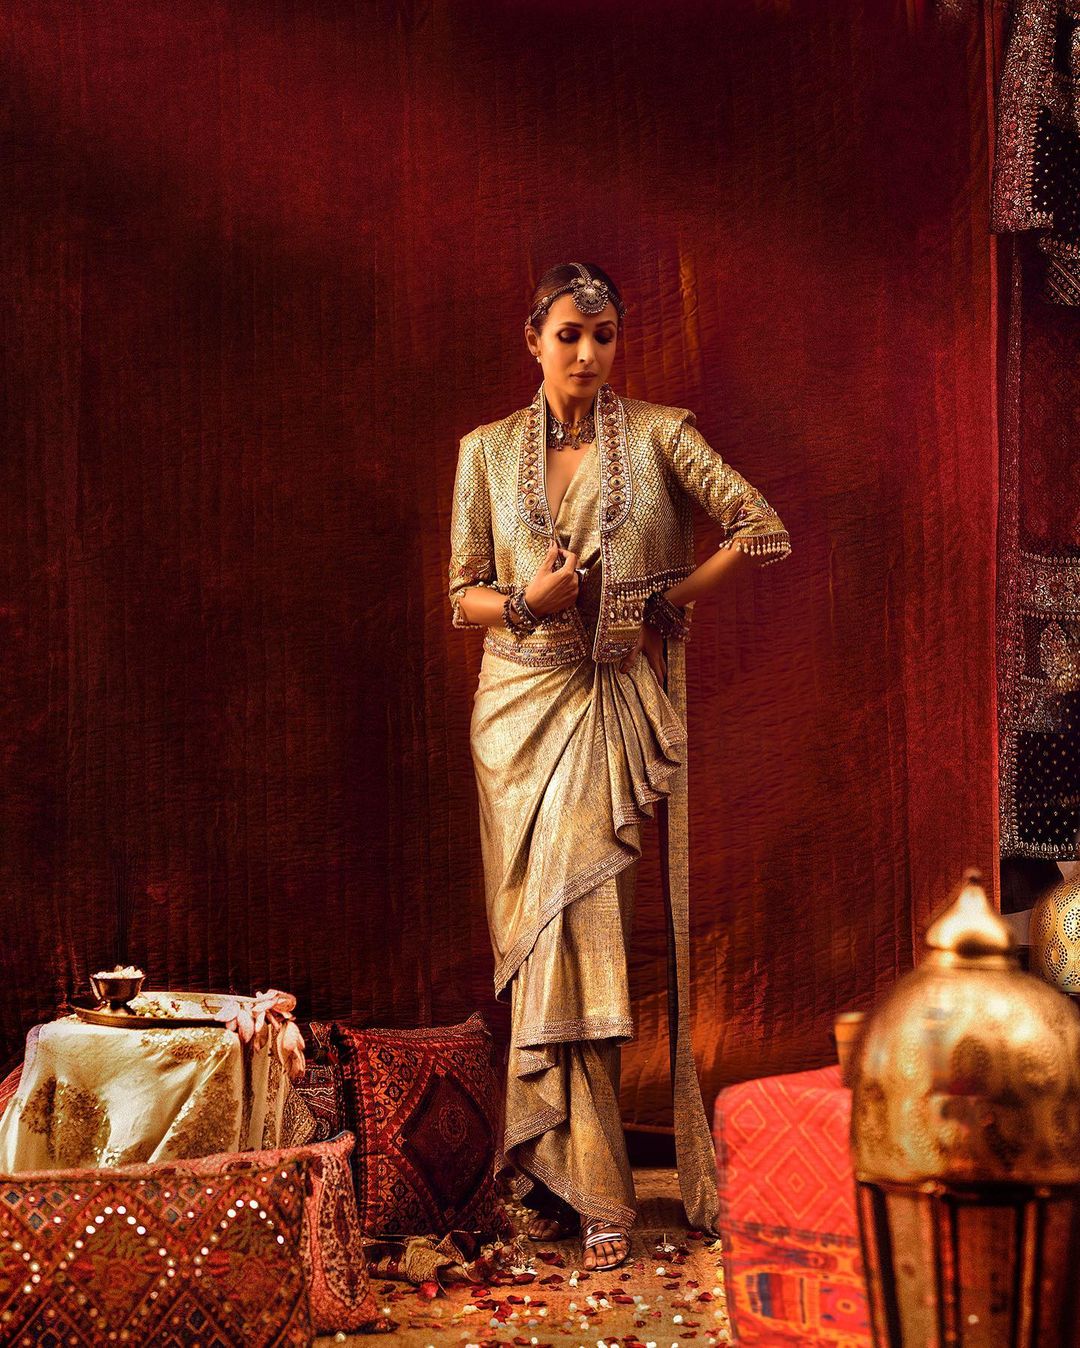  Malaika Arora looks hot as she poses in a Tarun Tahiliani outfit. (Image: Instagram)